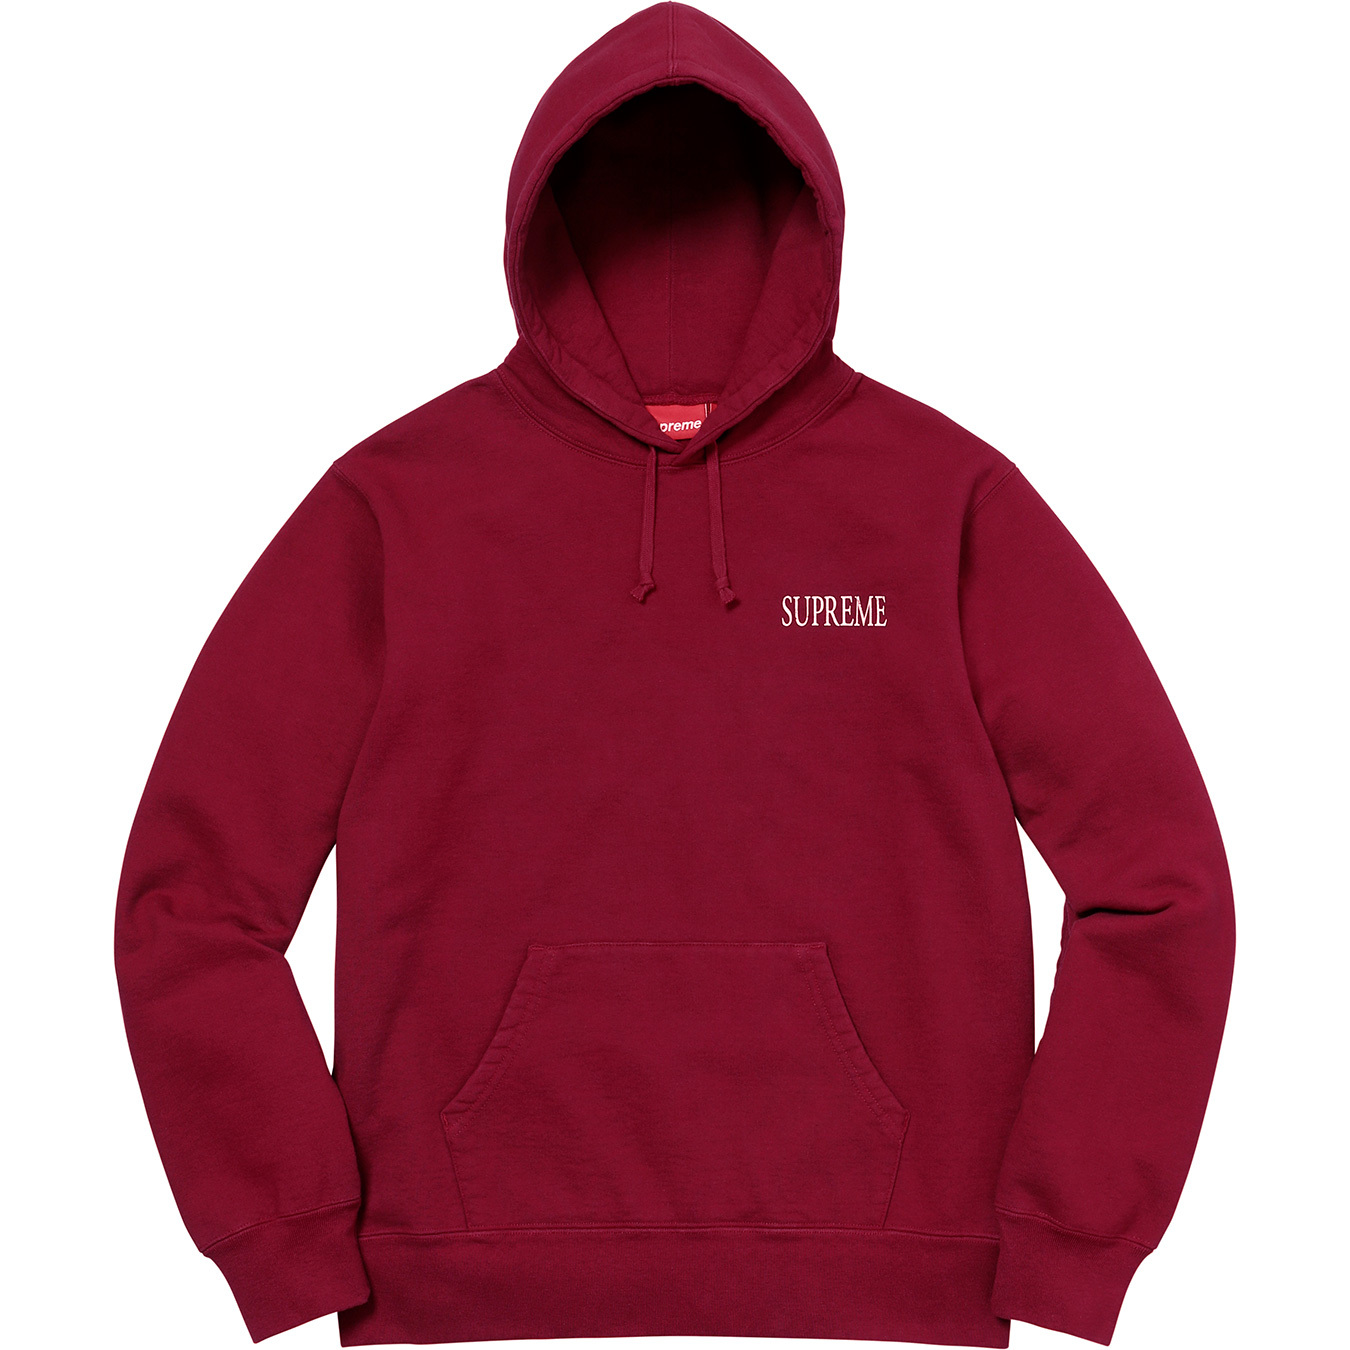 SUPREME Decline hooded sweatshirt - パーカー